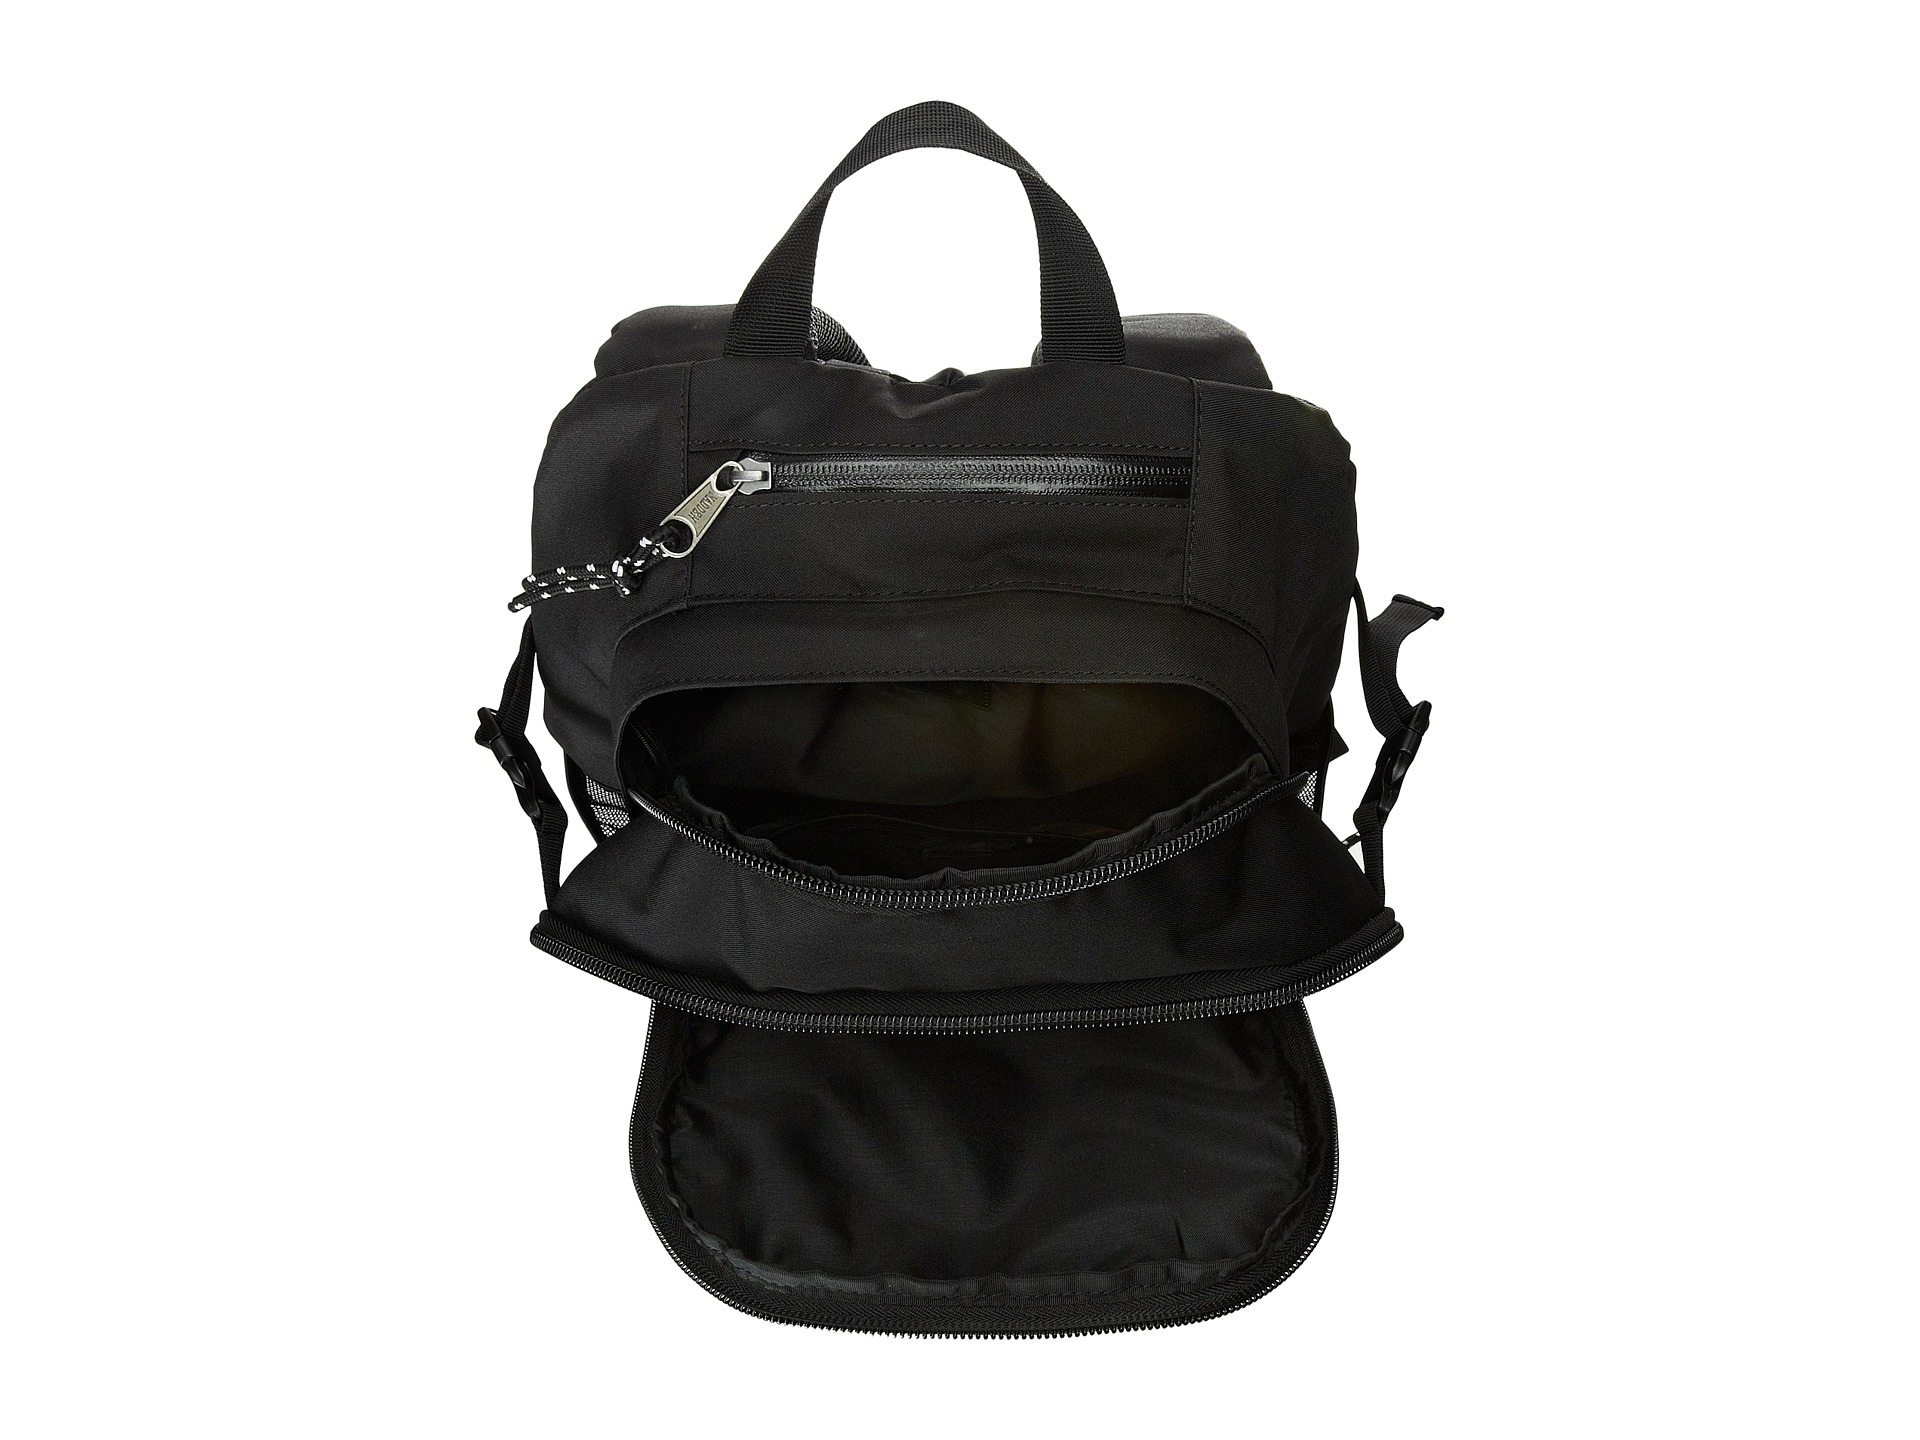 Steve Madden Nylon Sport Backpack Black | Shipped Free at Zappos